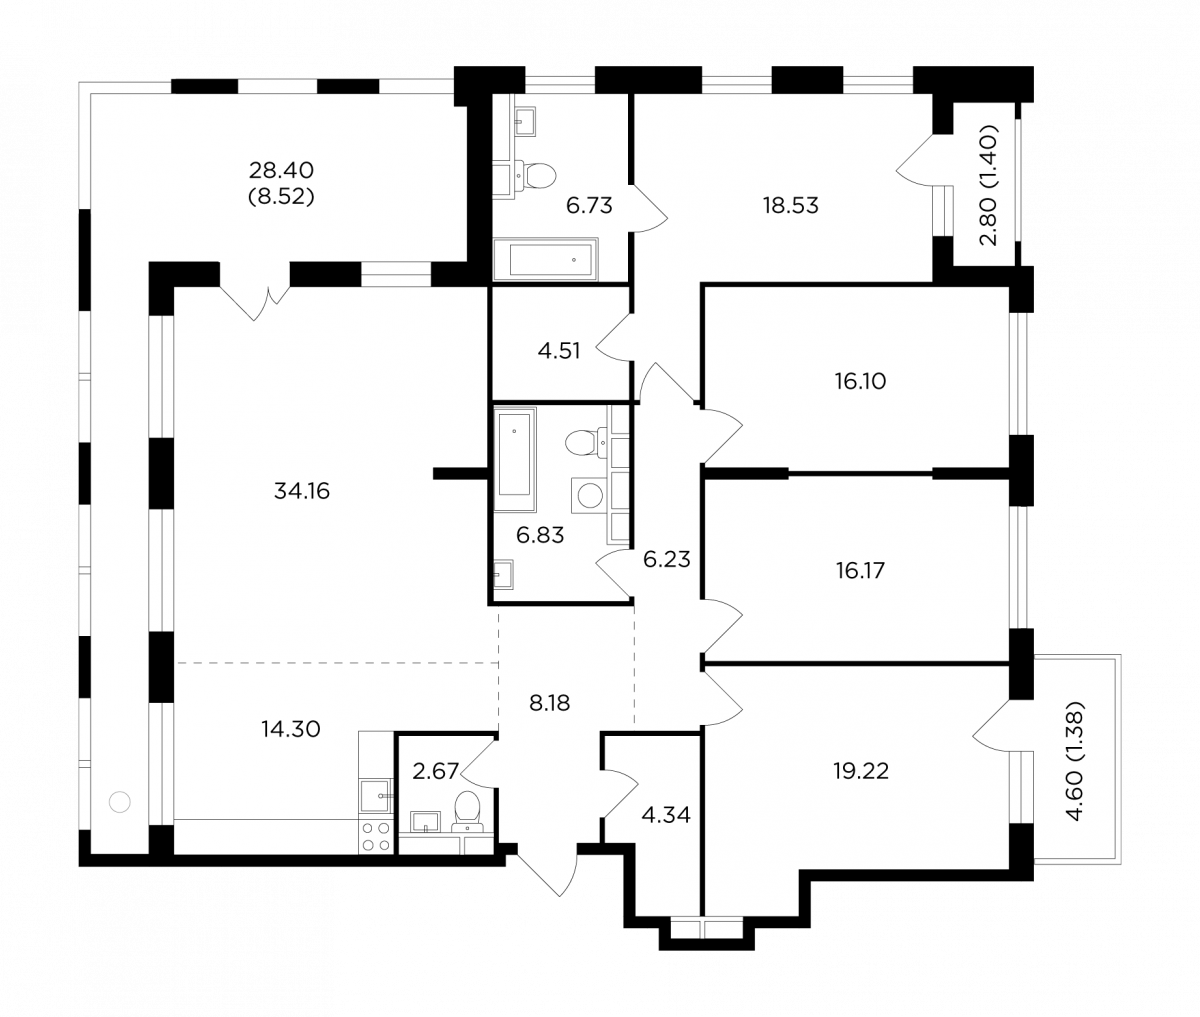 Планировка 5-комнатная квартира в ЖК TopHills (ТопХиллс)